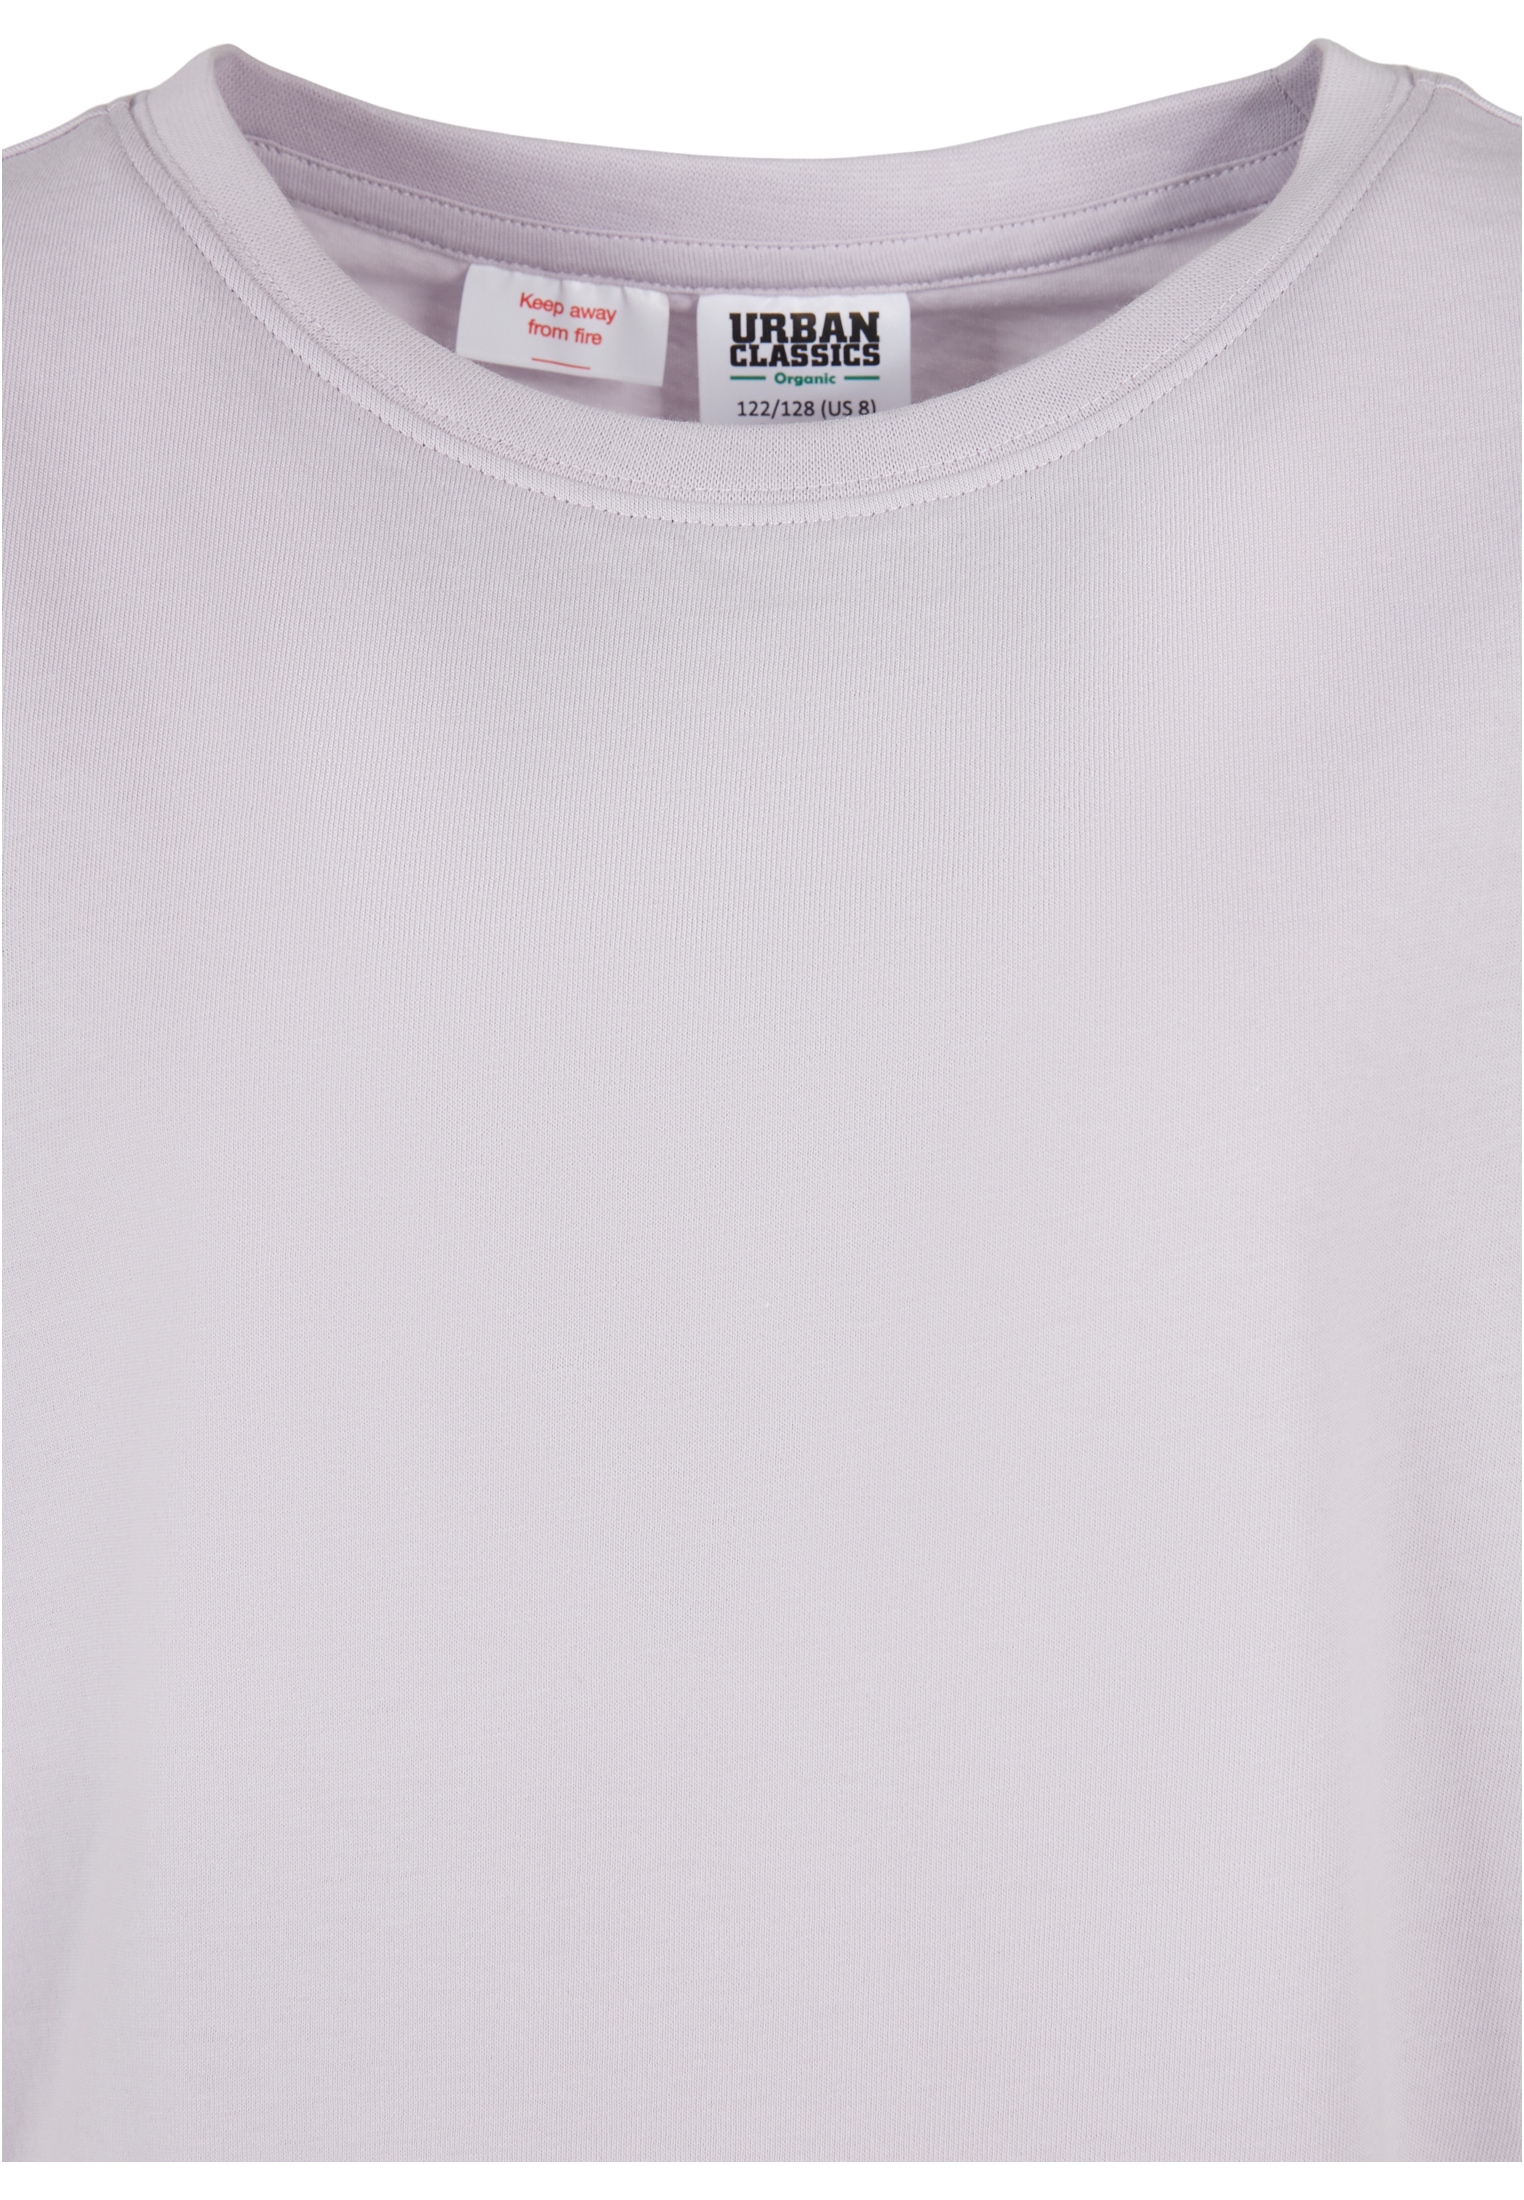 Tee«, CLASSICS Extended »Kinder (1 | ▷ für URBAN Shoulder BAUR tlg.) Organic Girls T-Shirt